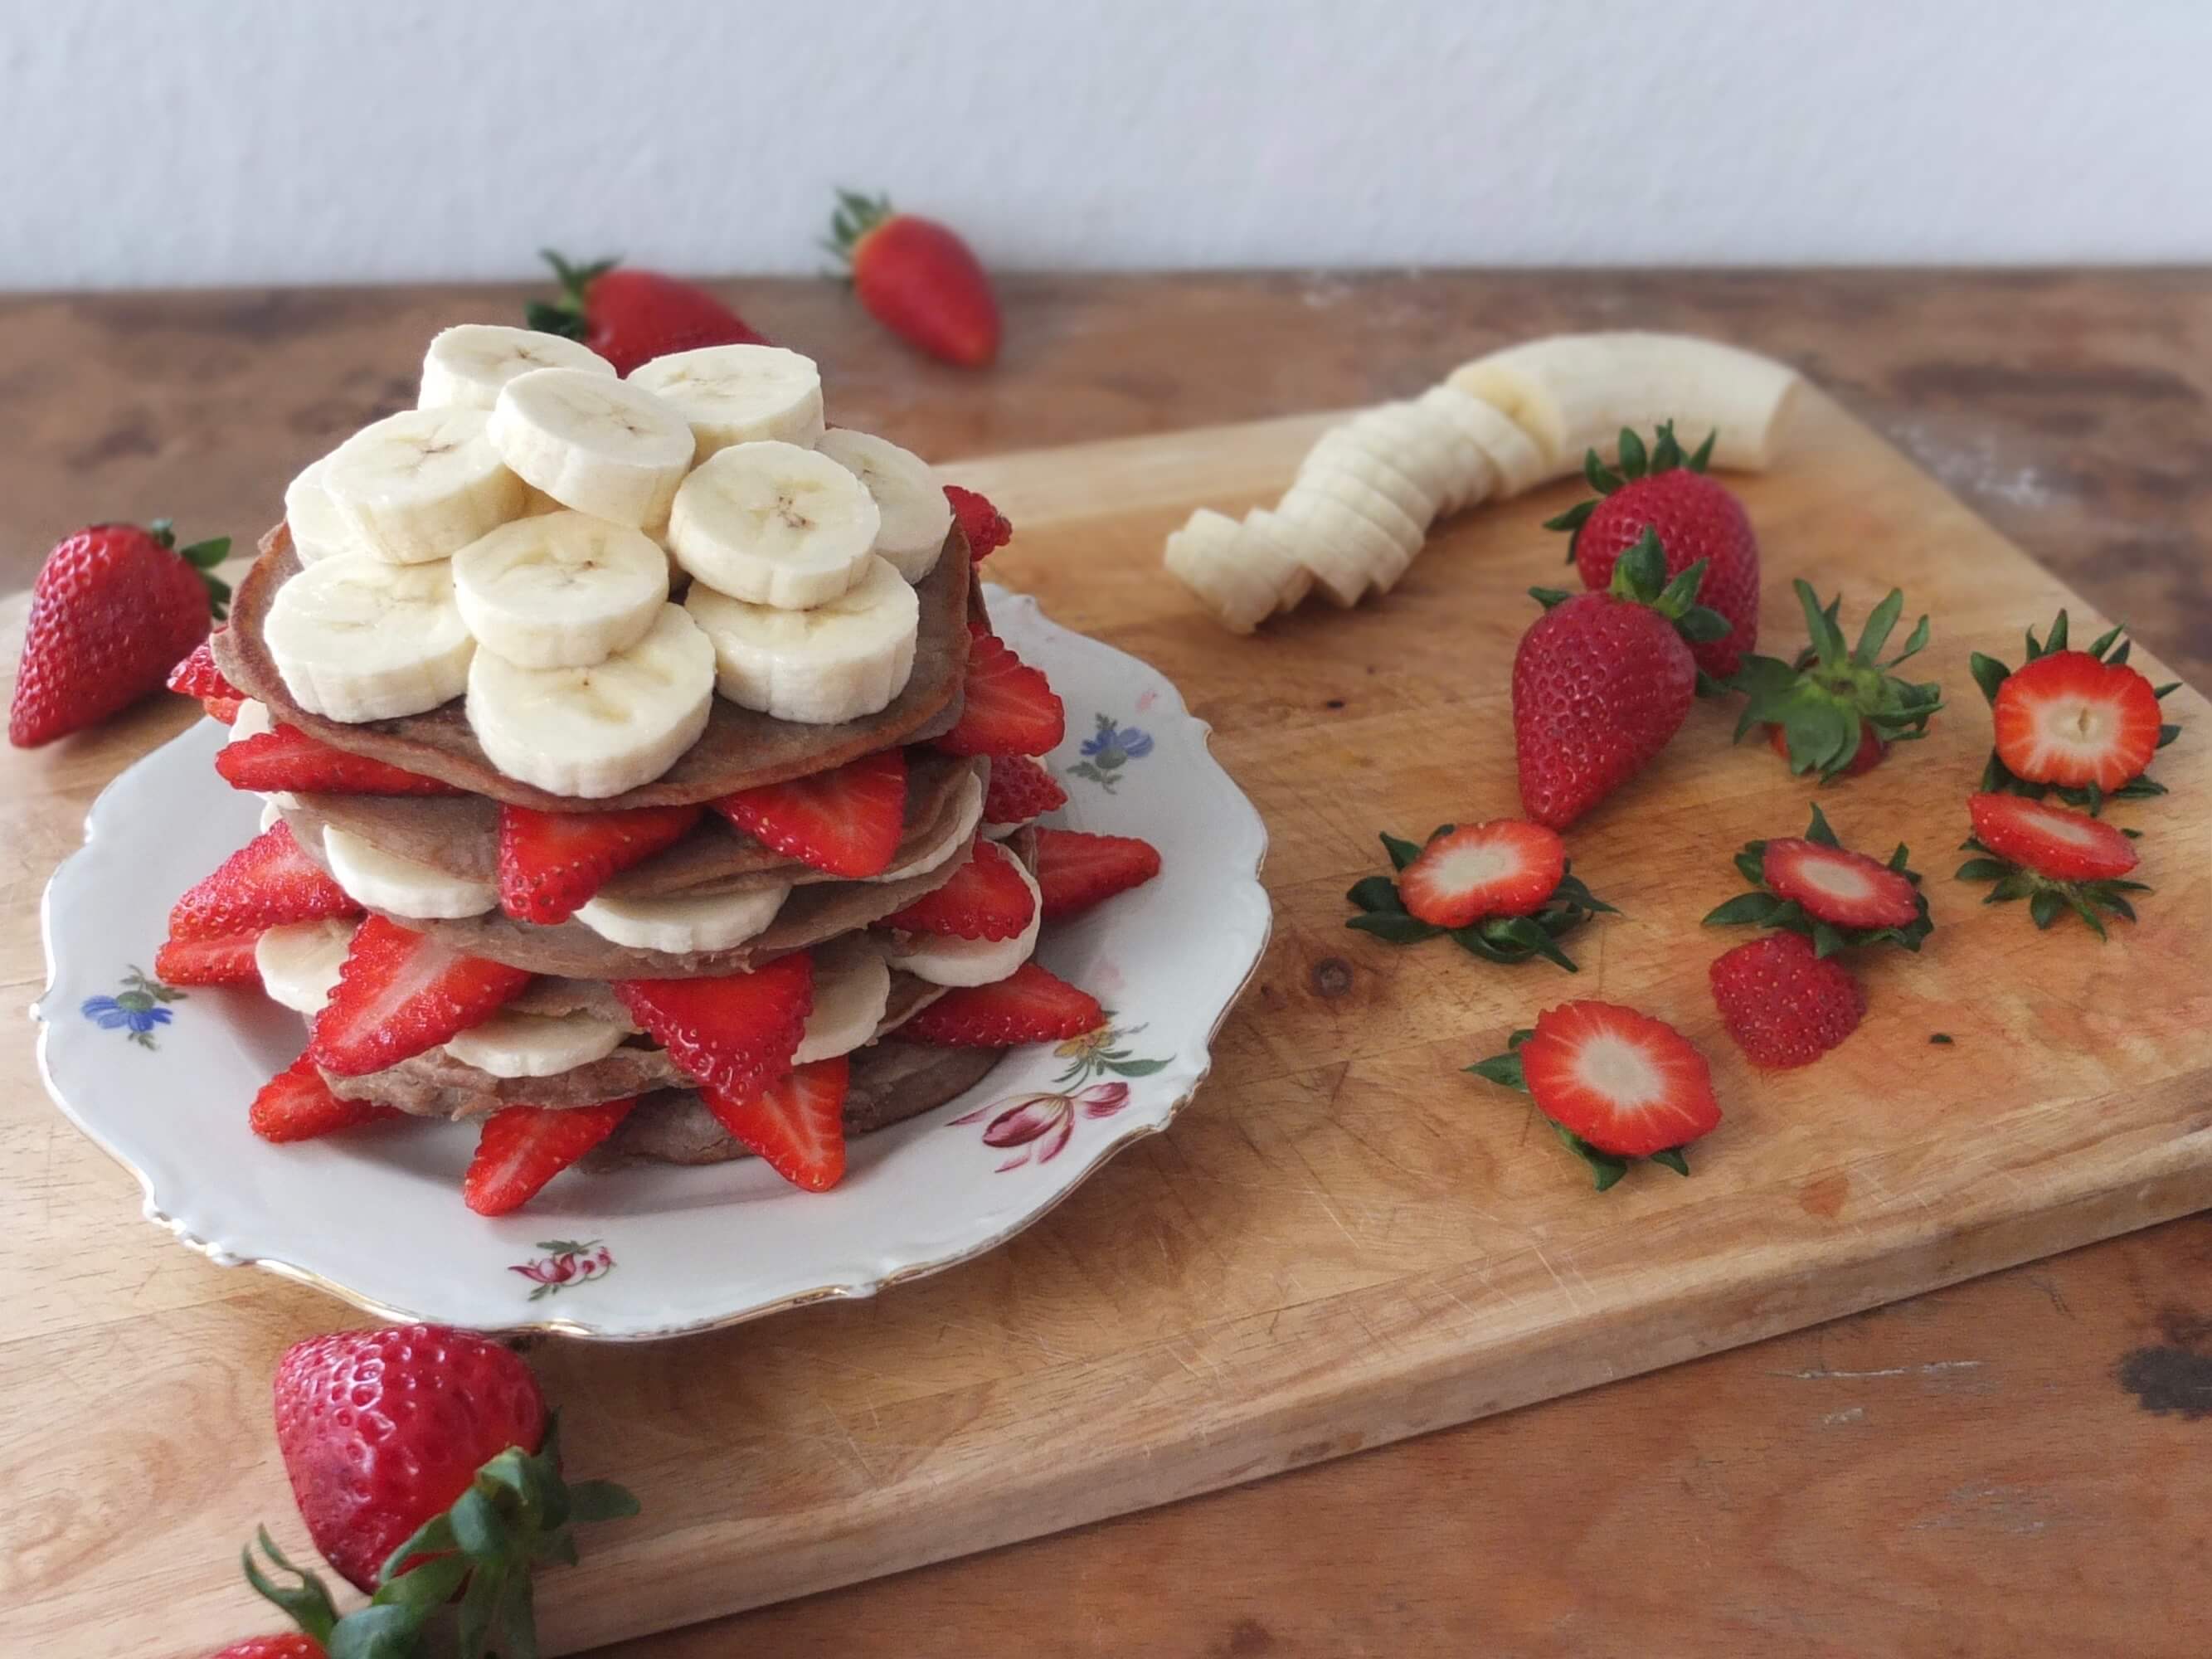 Vegane Buchweizen-Bananen-Pancakes - La Crema Patisserie Foodblog Backblog